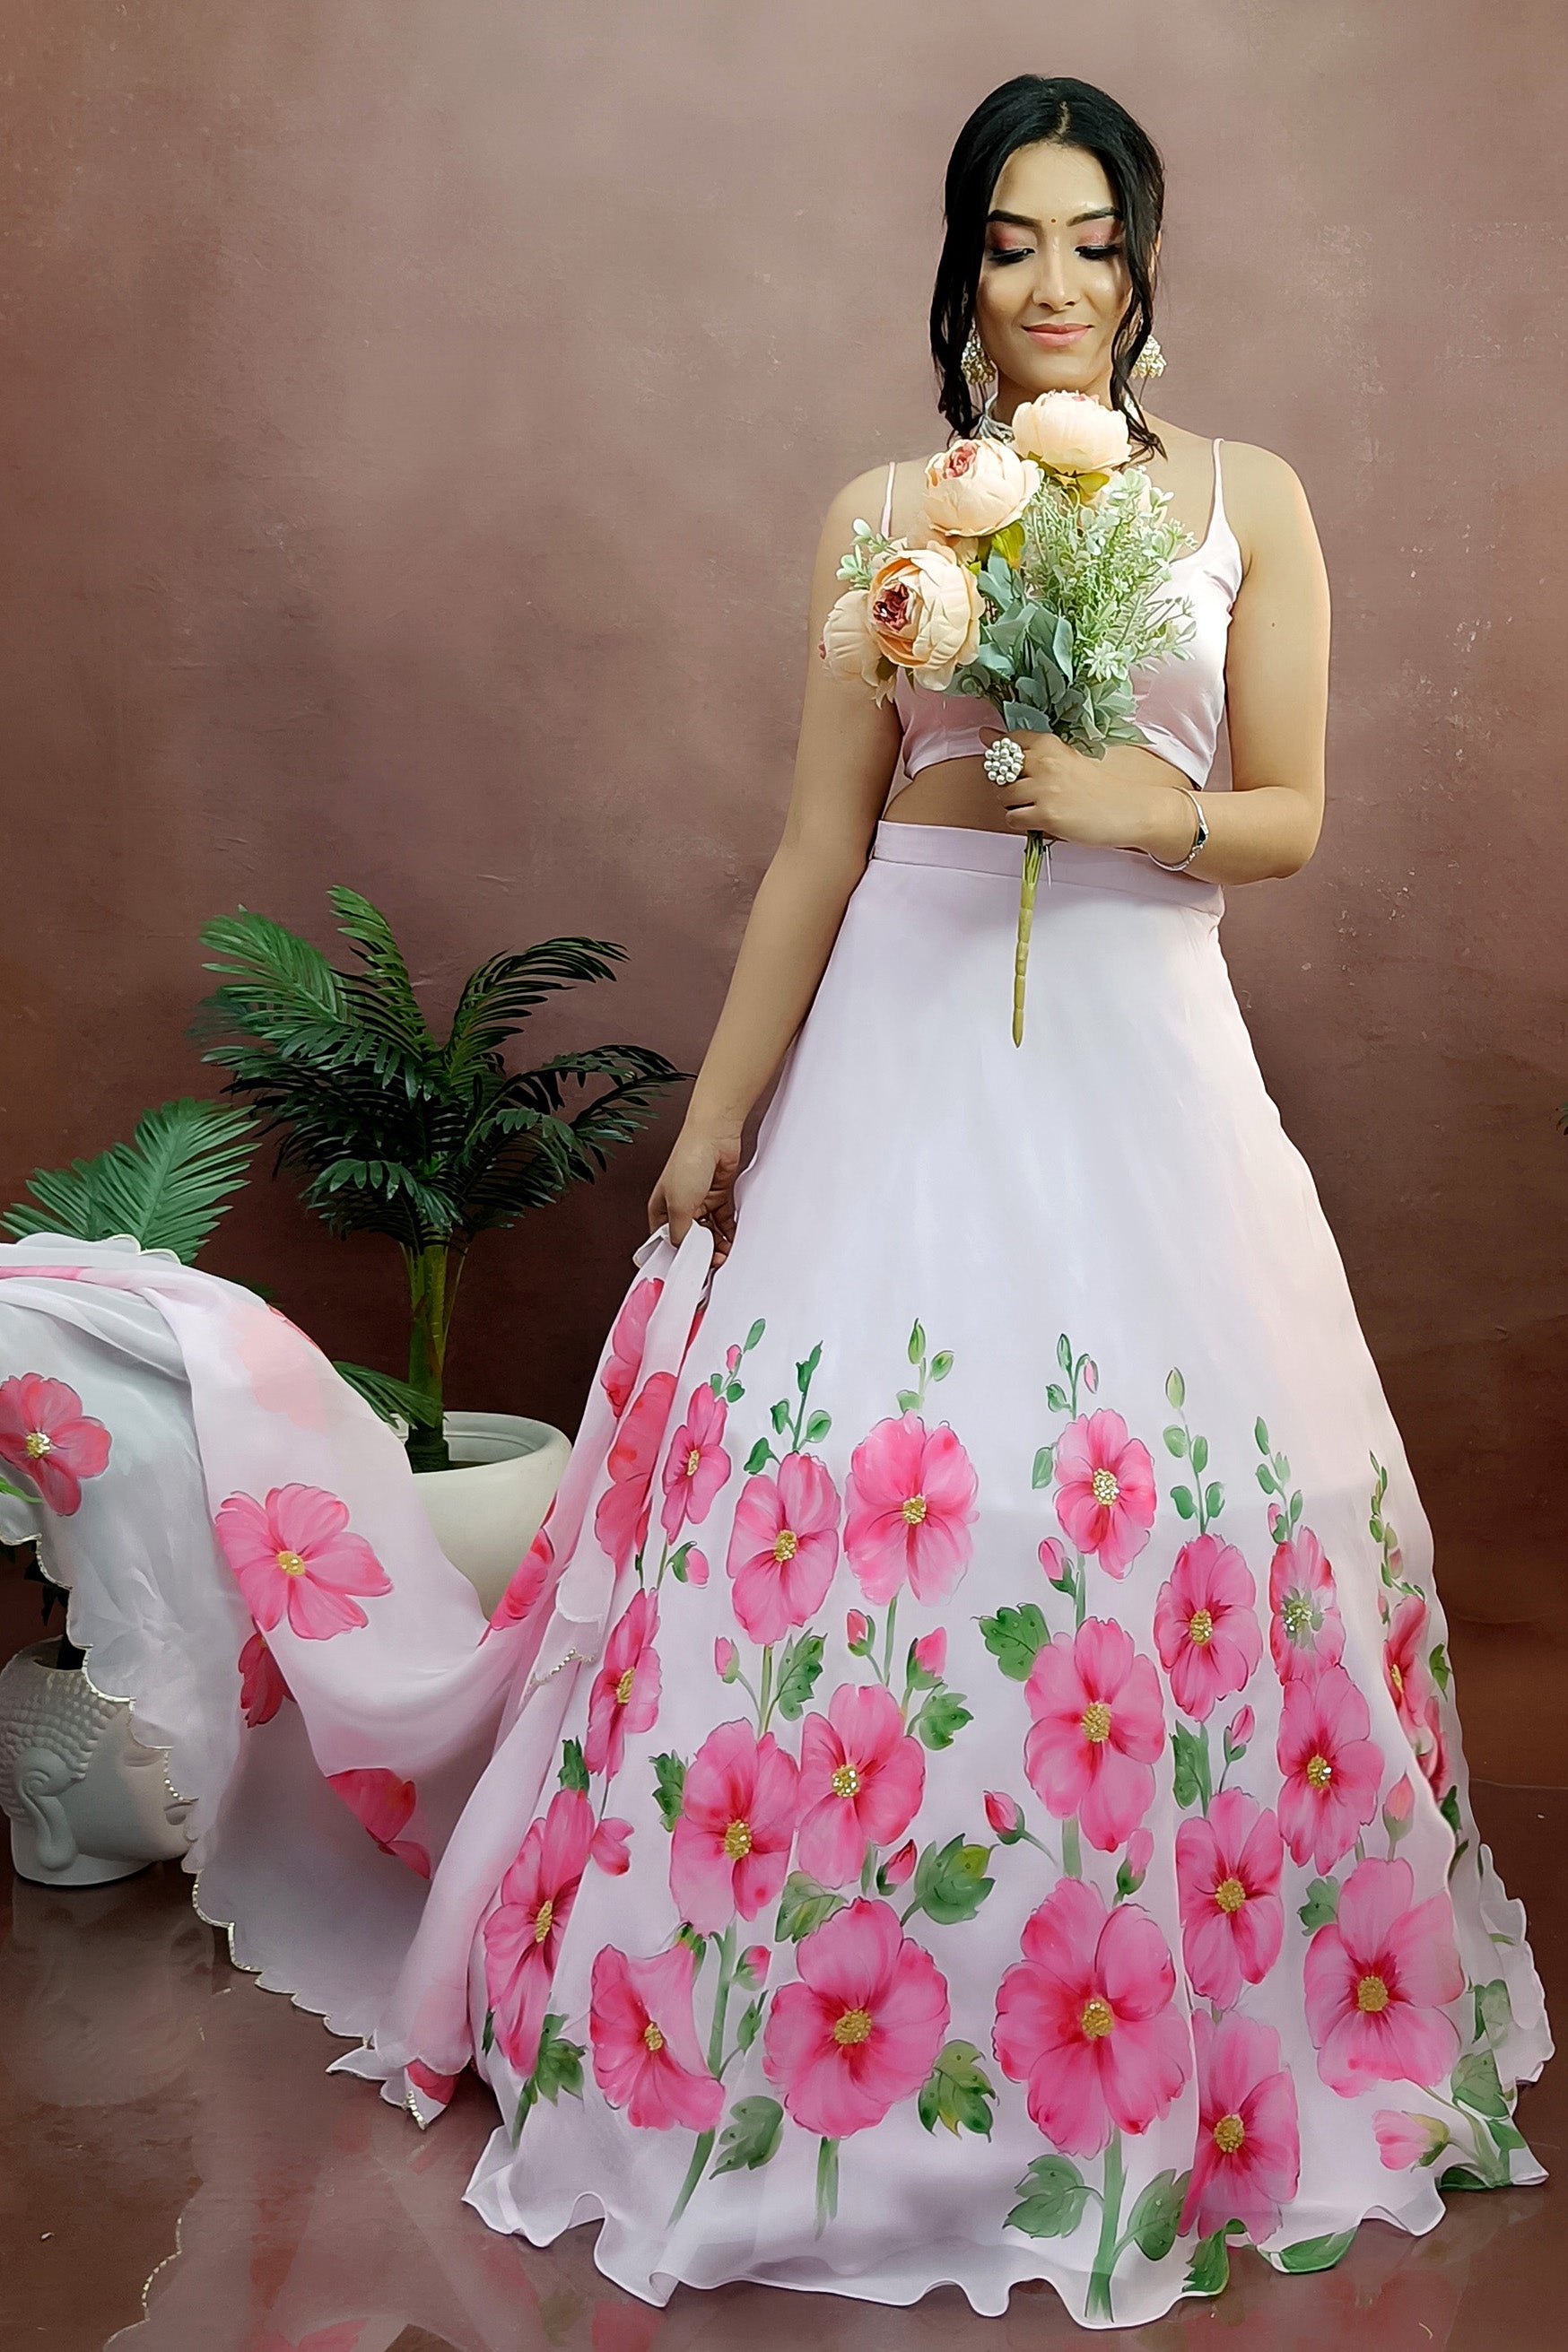 How to Embellish a Wedding Dress